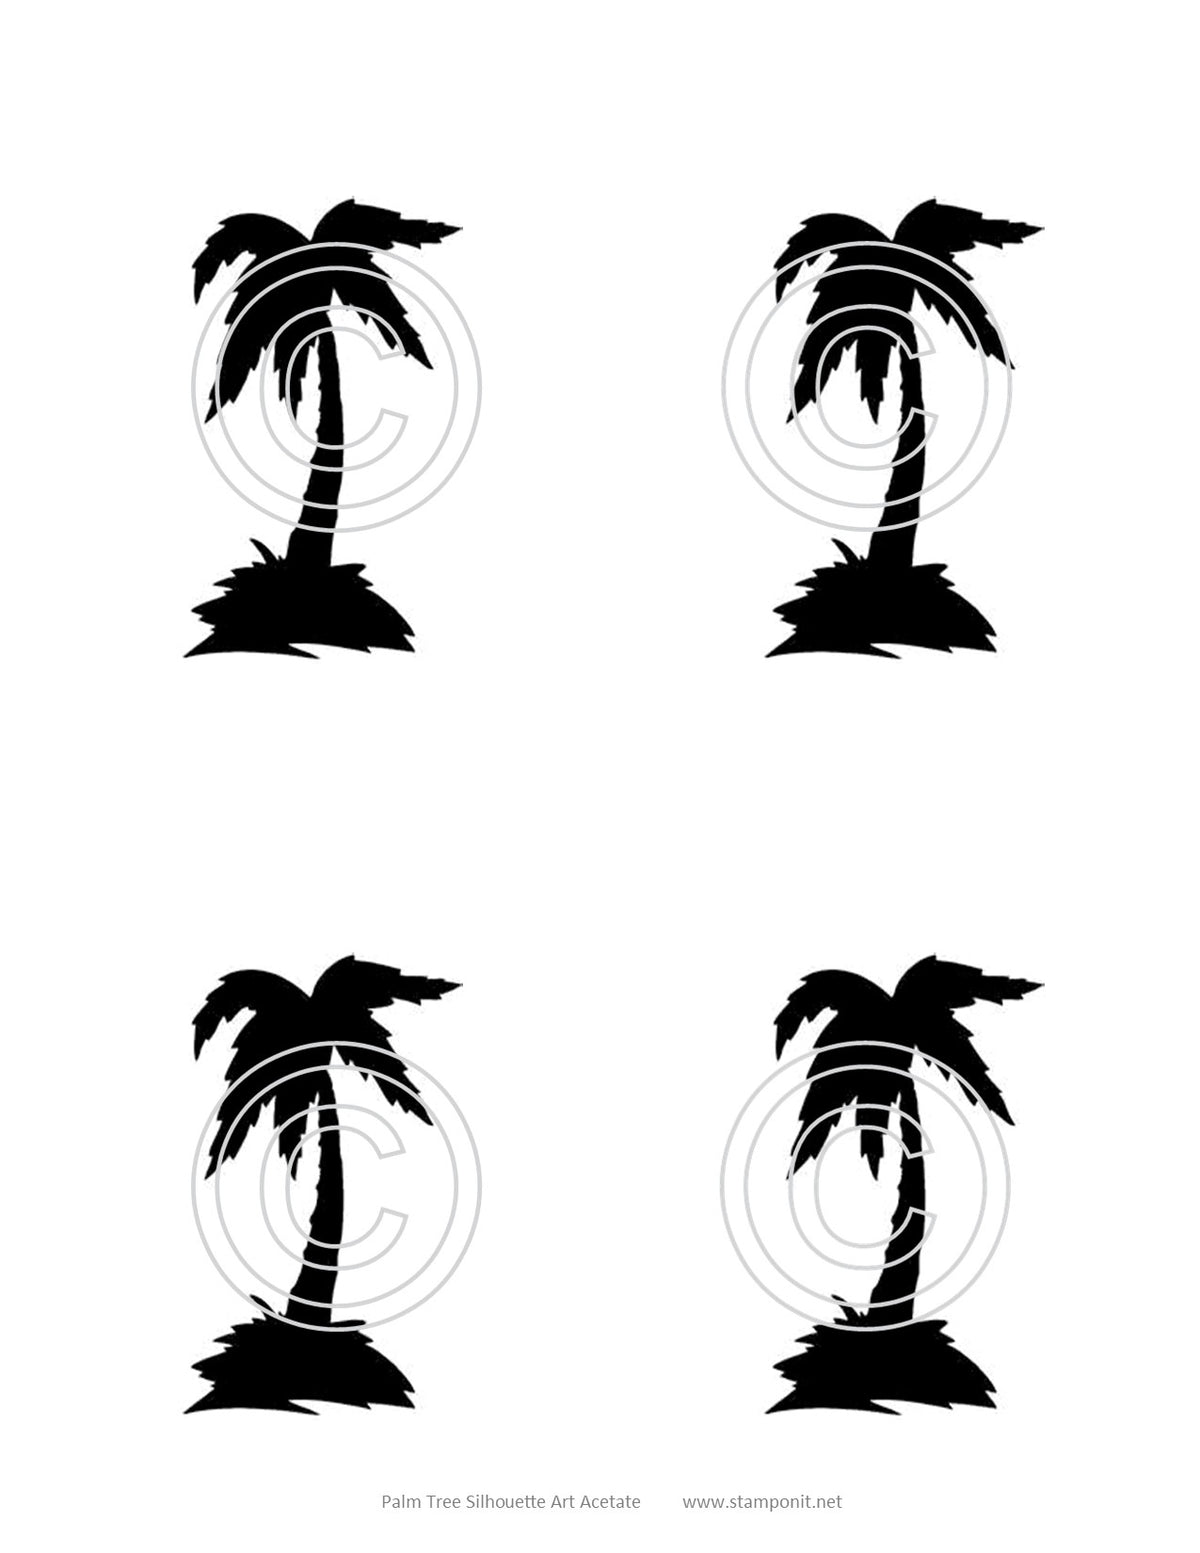 Palm Art Acetate Silhouette